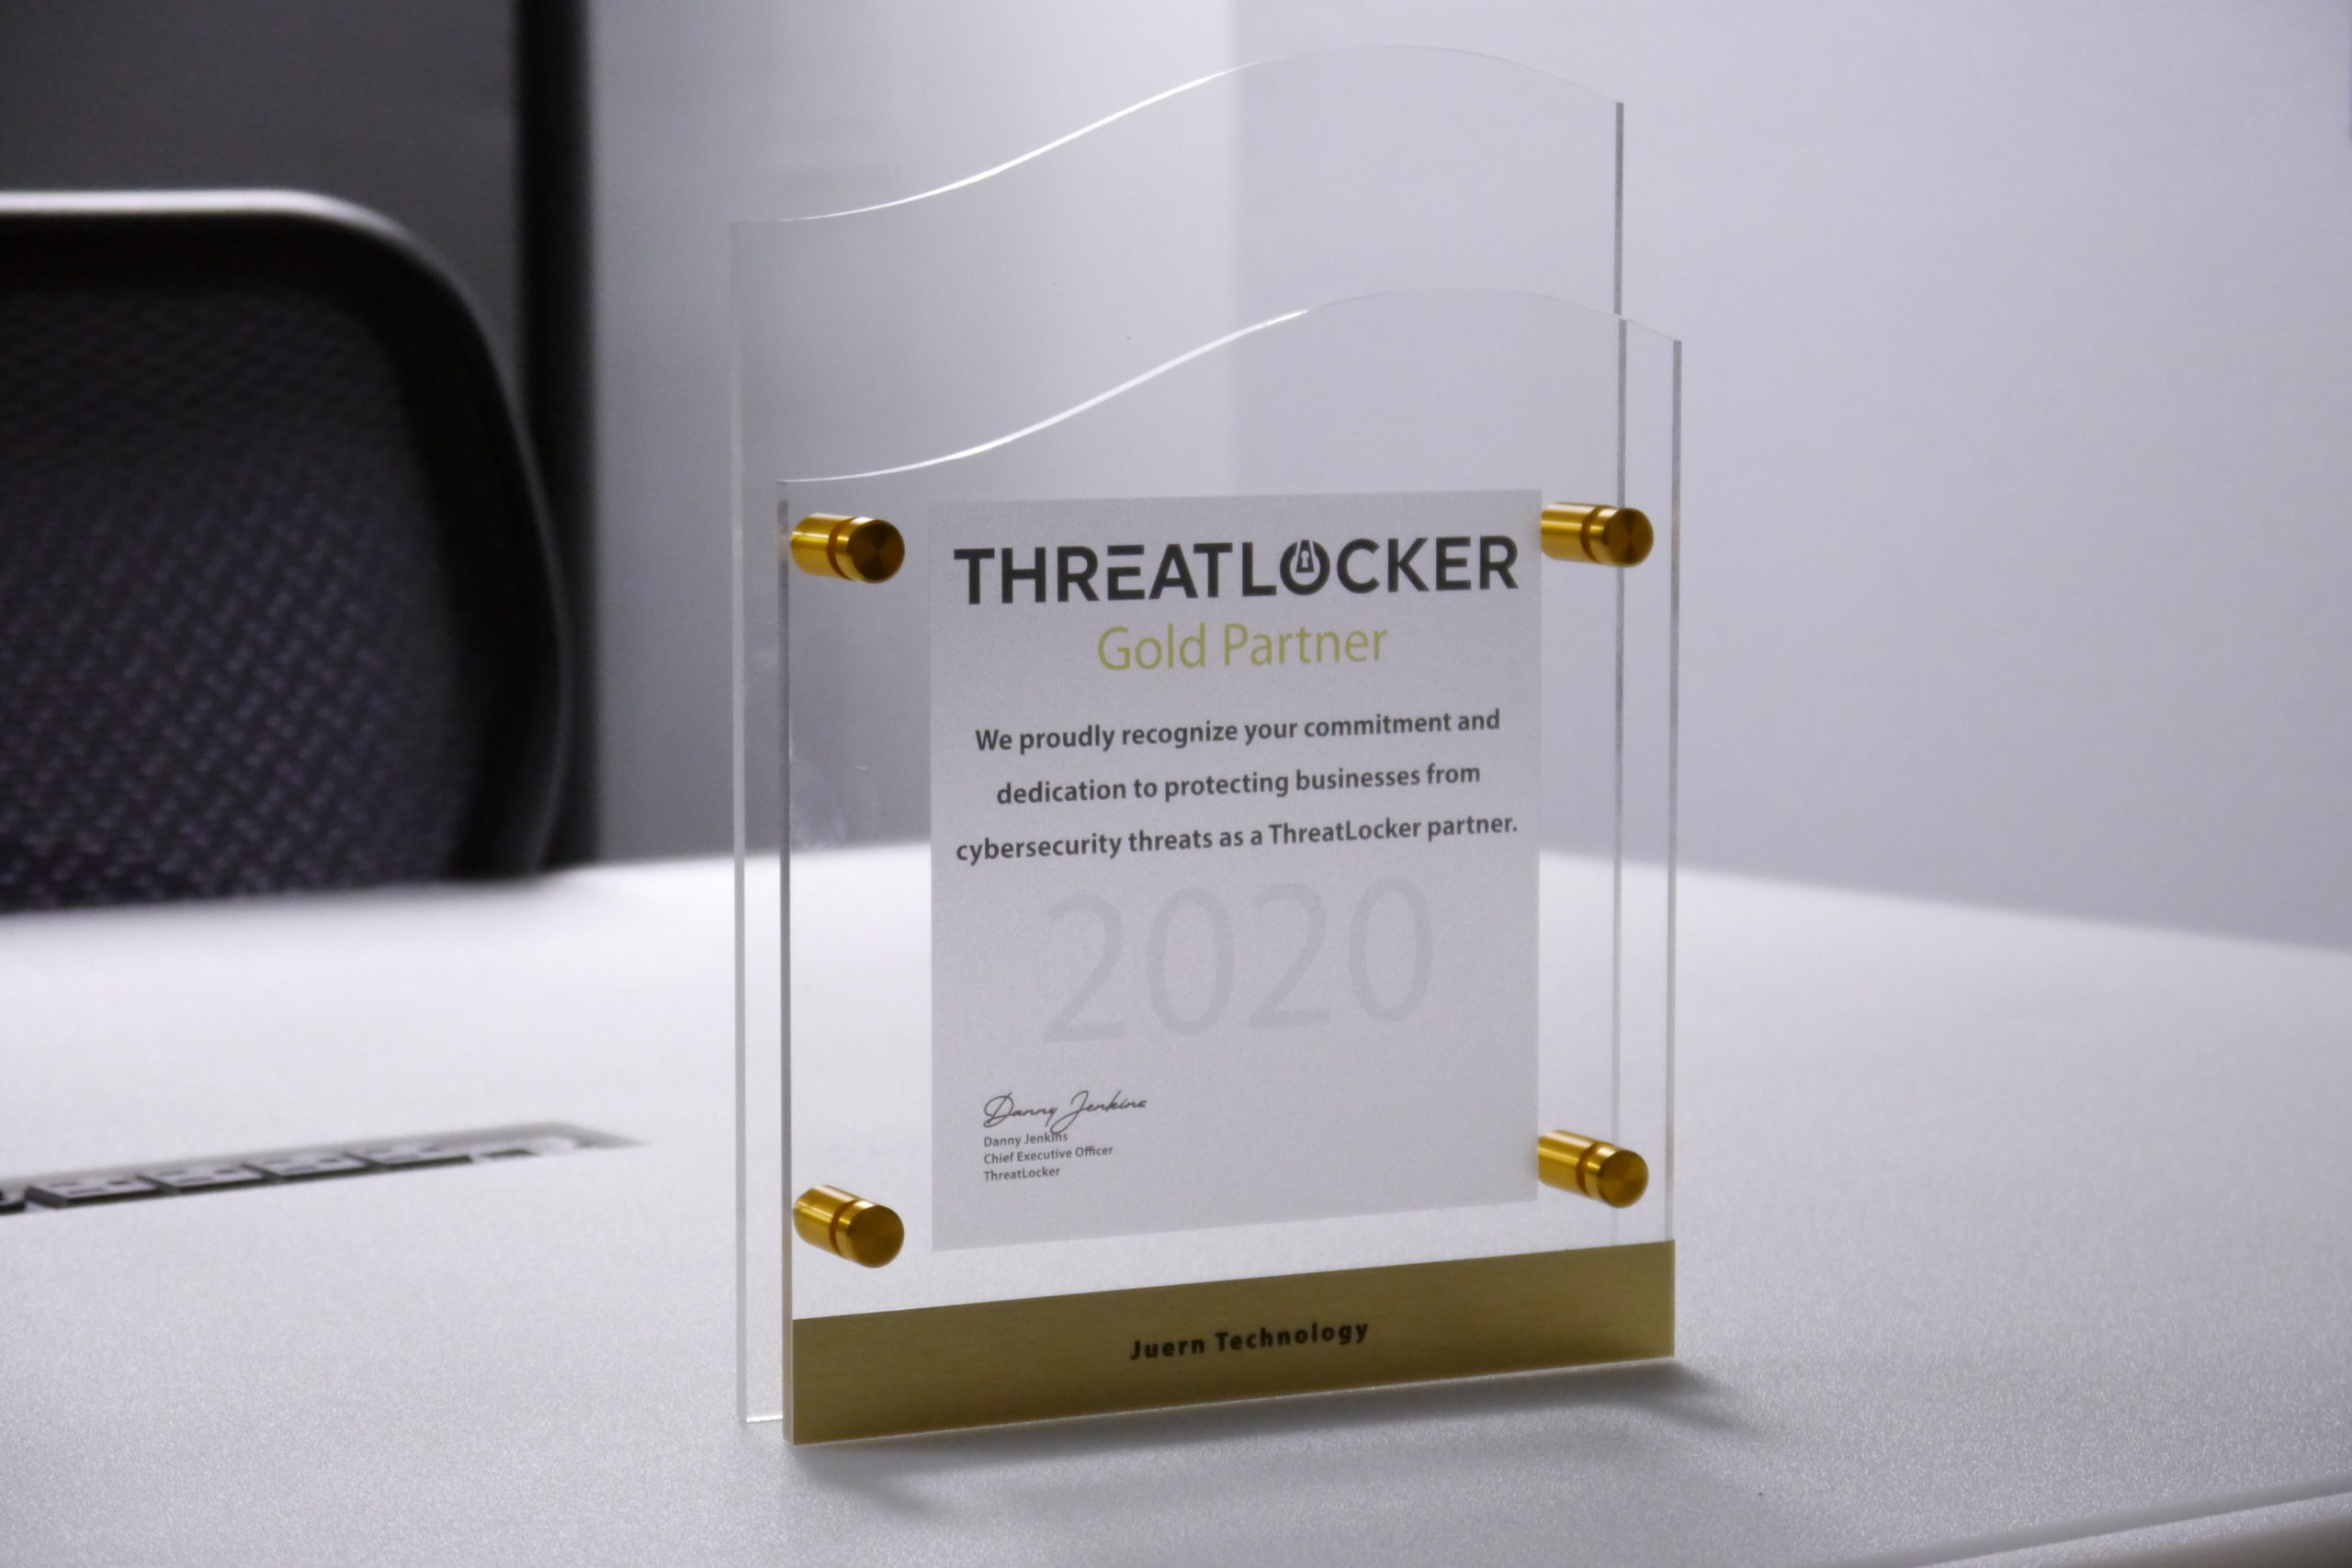 Juern Technology's Gold Partner Award from ThreatLocker